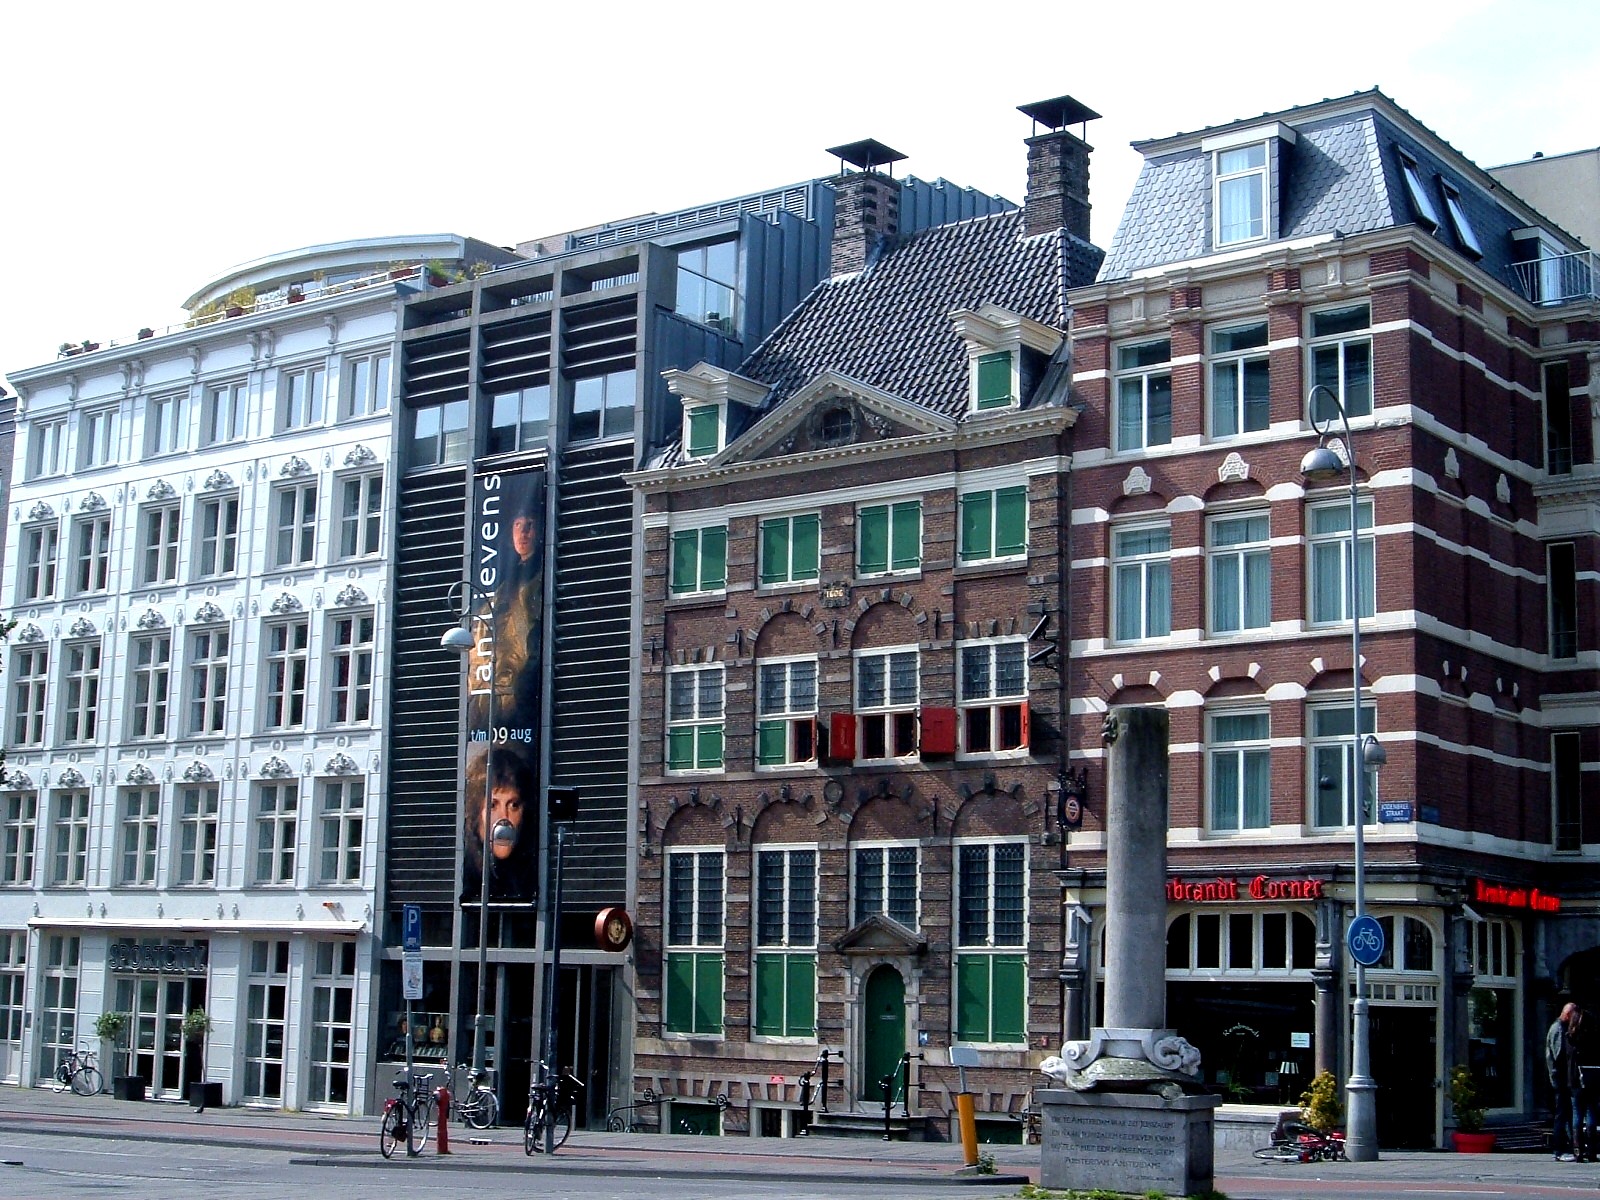 11 meilleures choses à faire à Amsterdam, Pays-Bas [with Suggested Tours]